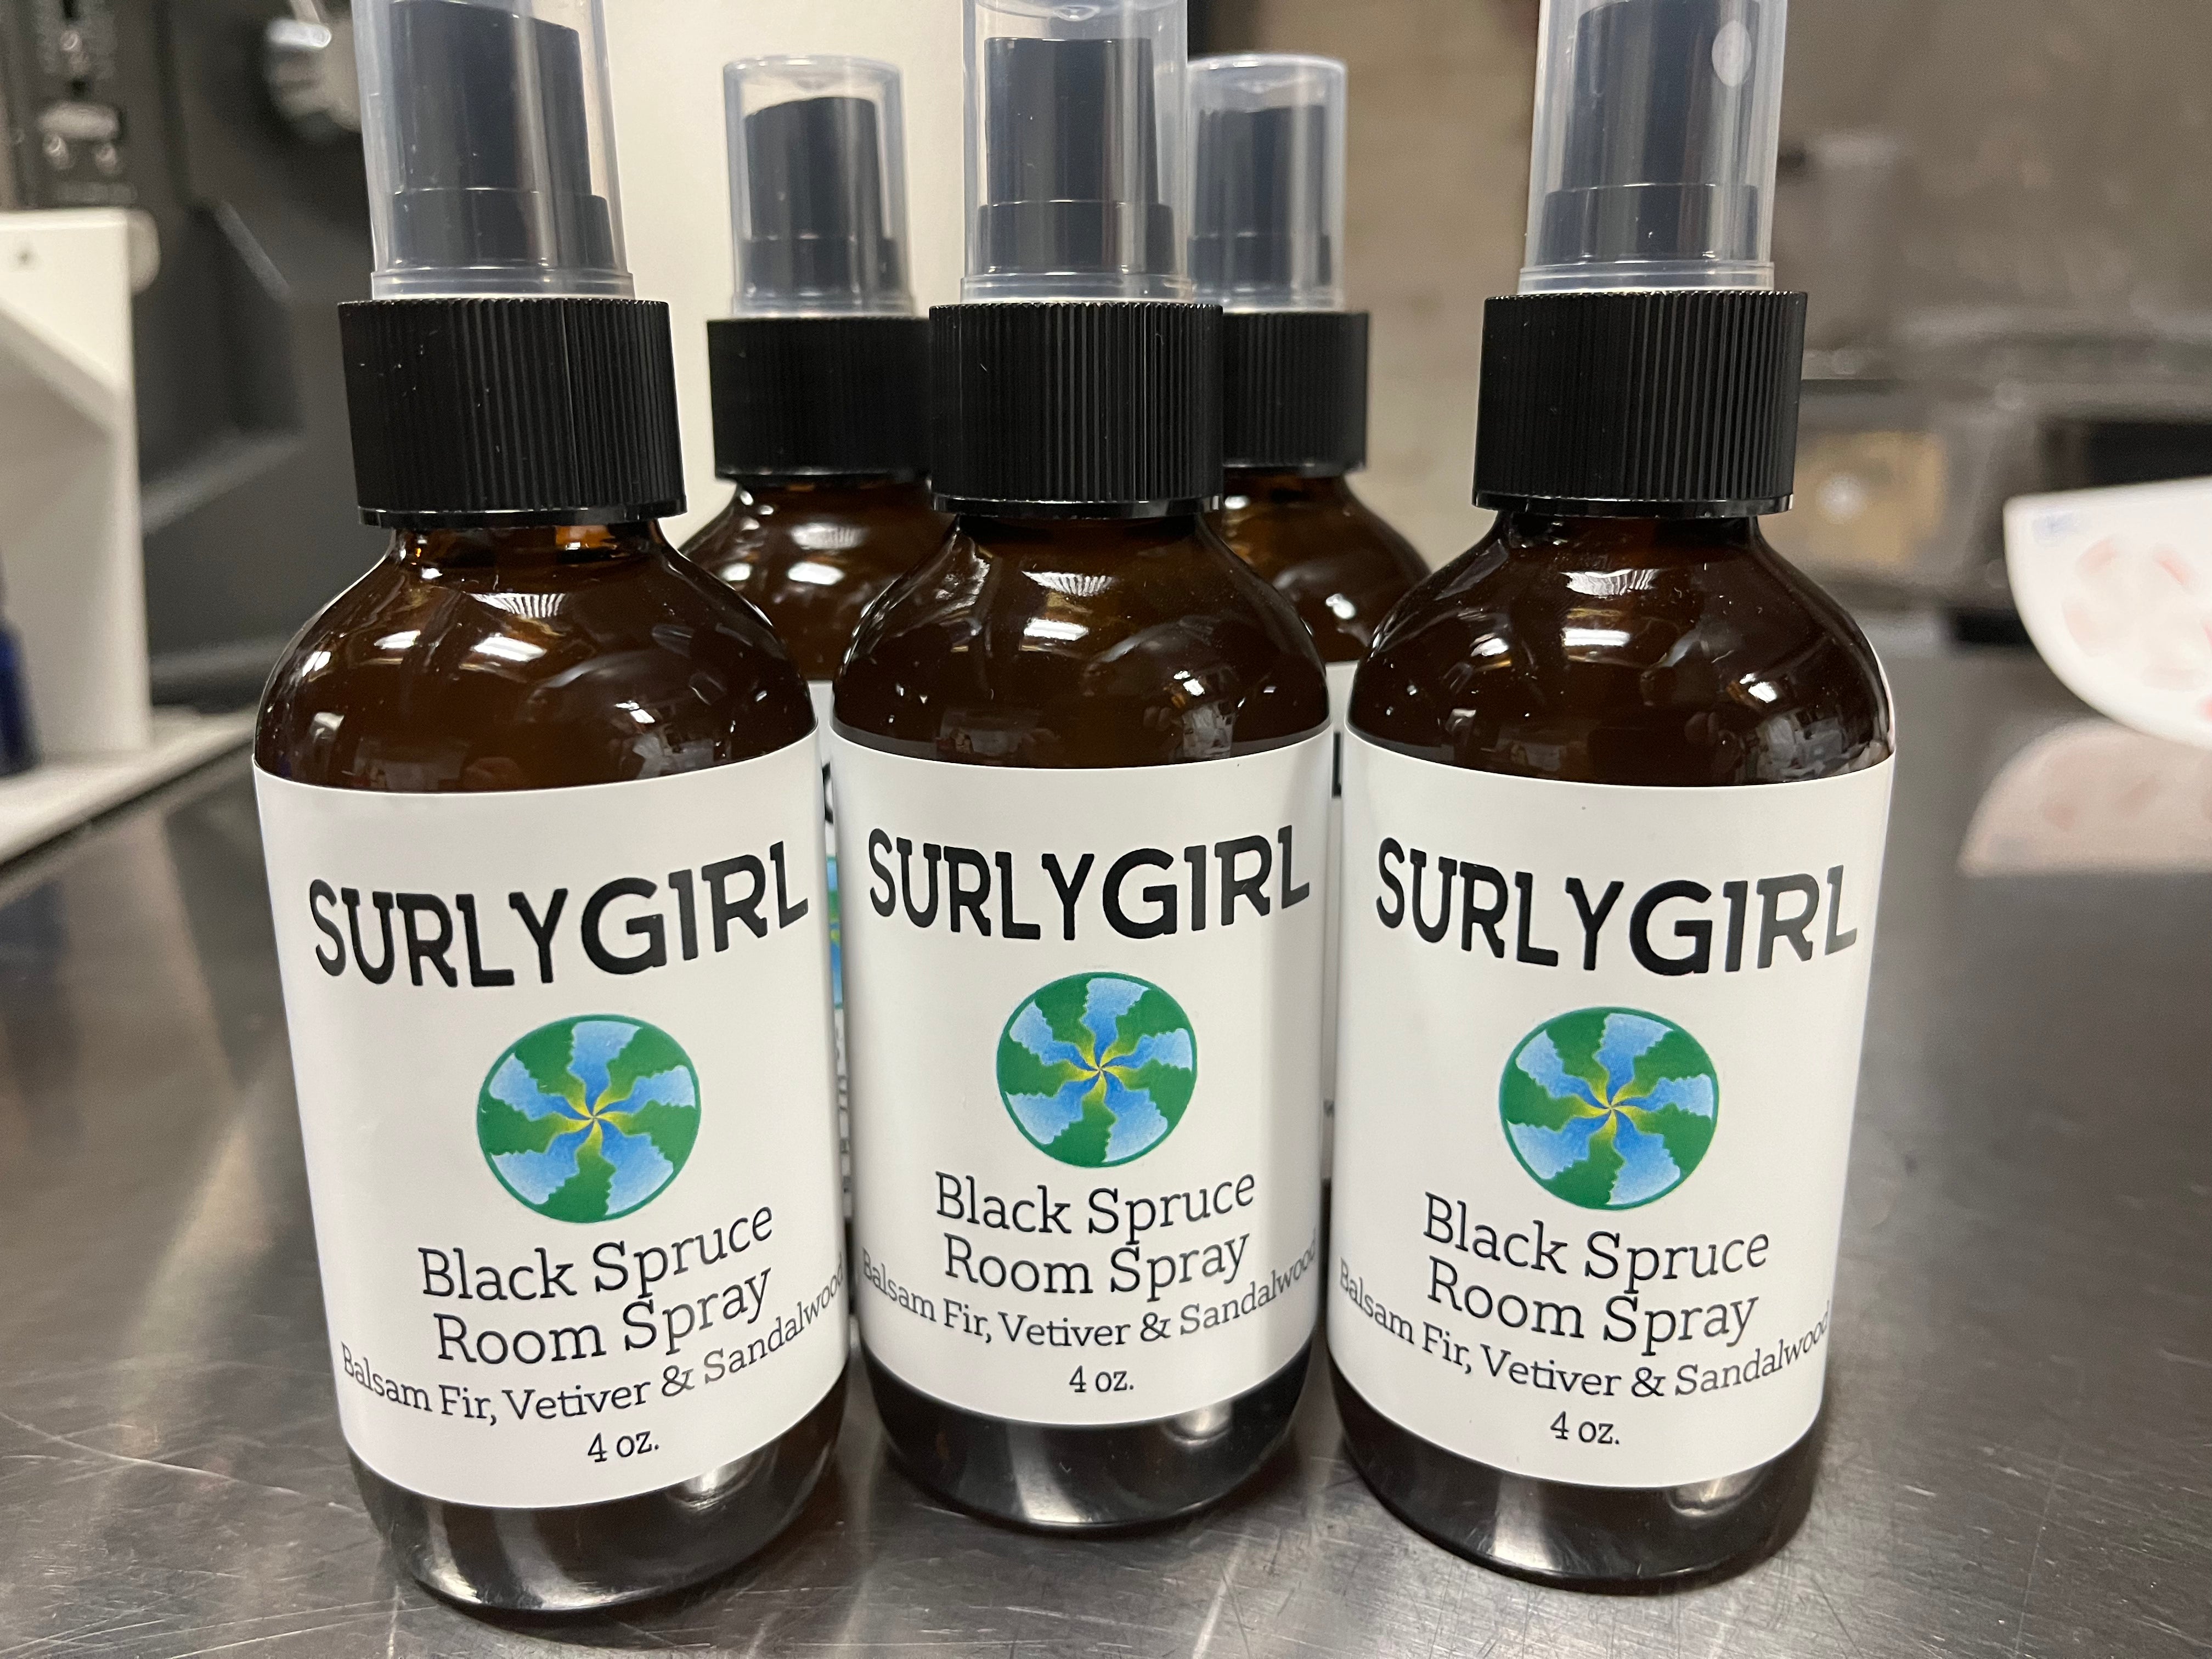 Black Spruce Room Spray